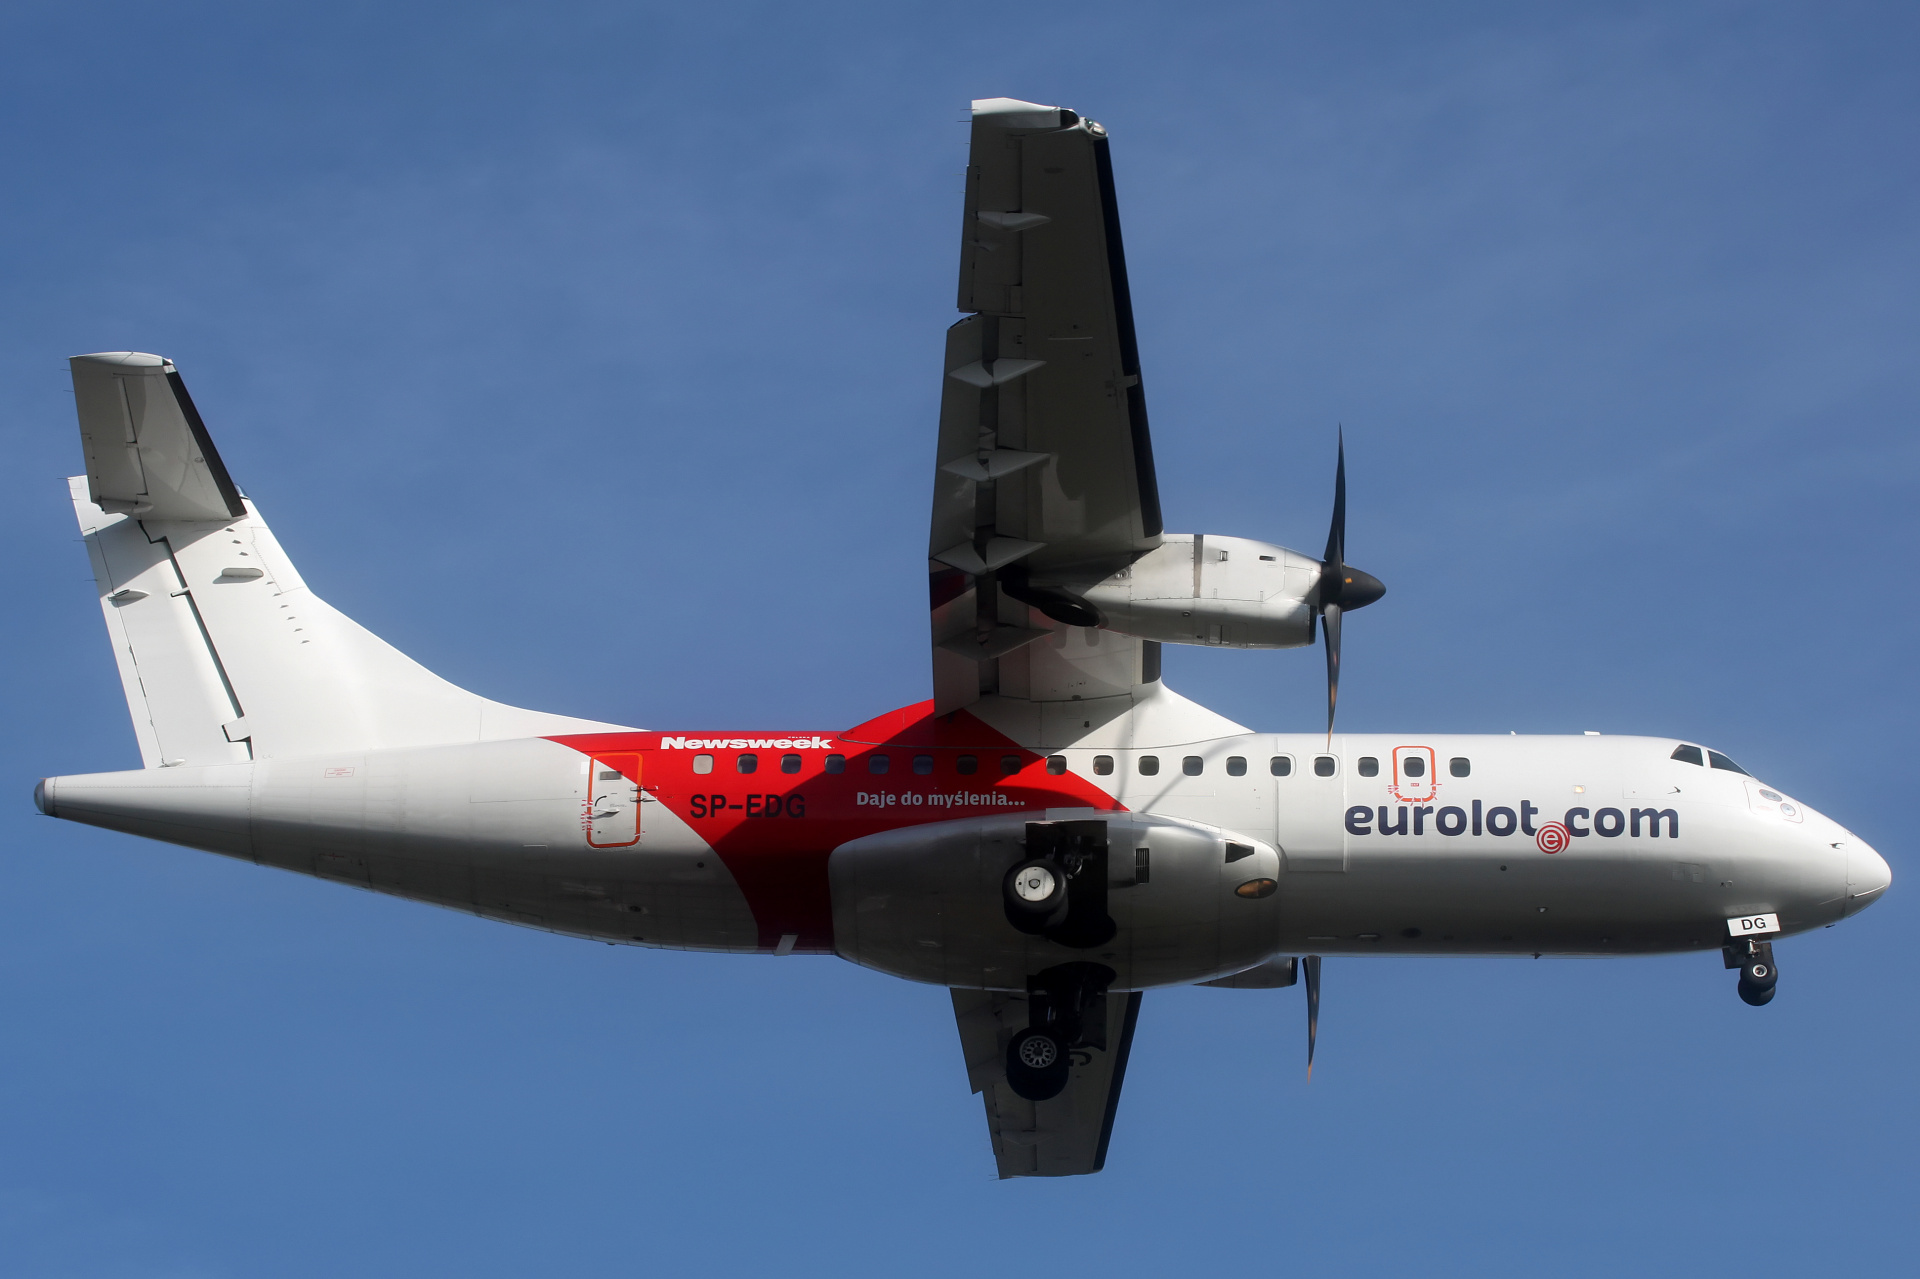 SP-EDG (Newsweek livery) (Aircraft » EPWA Spotting » ATR 42 » EuroLOT)